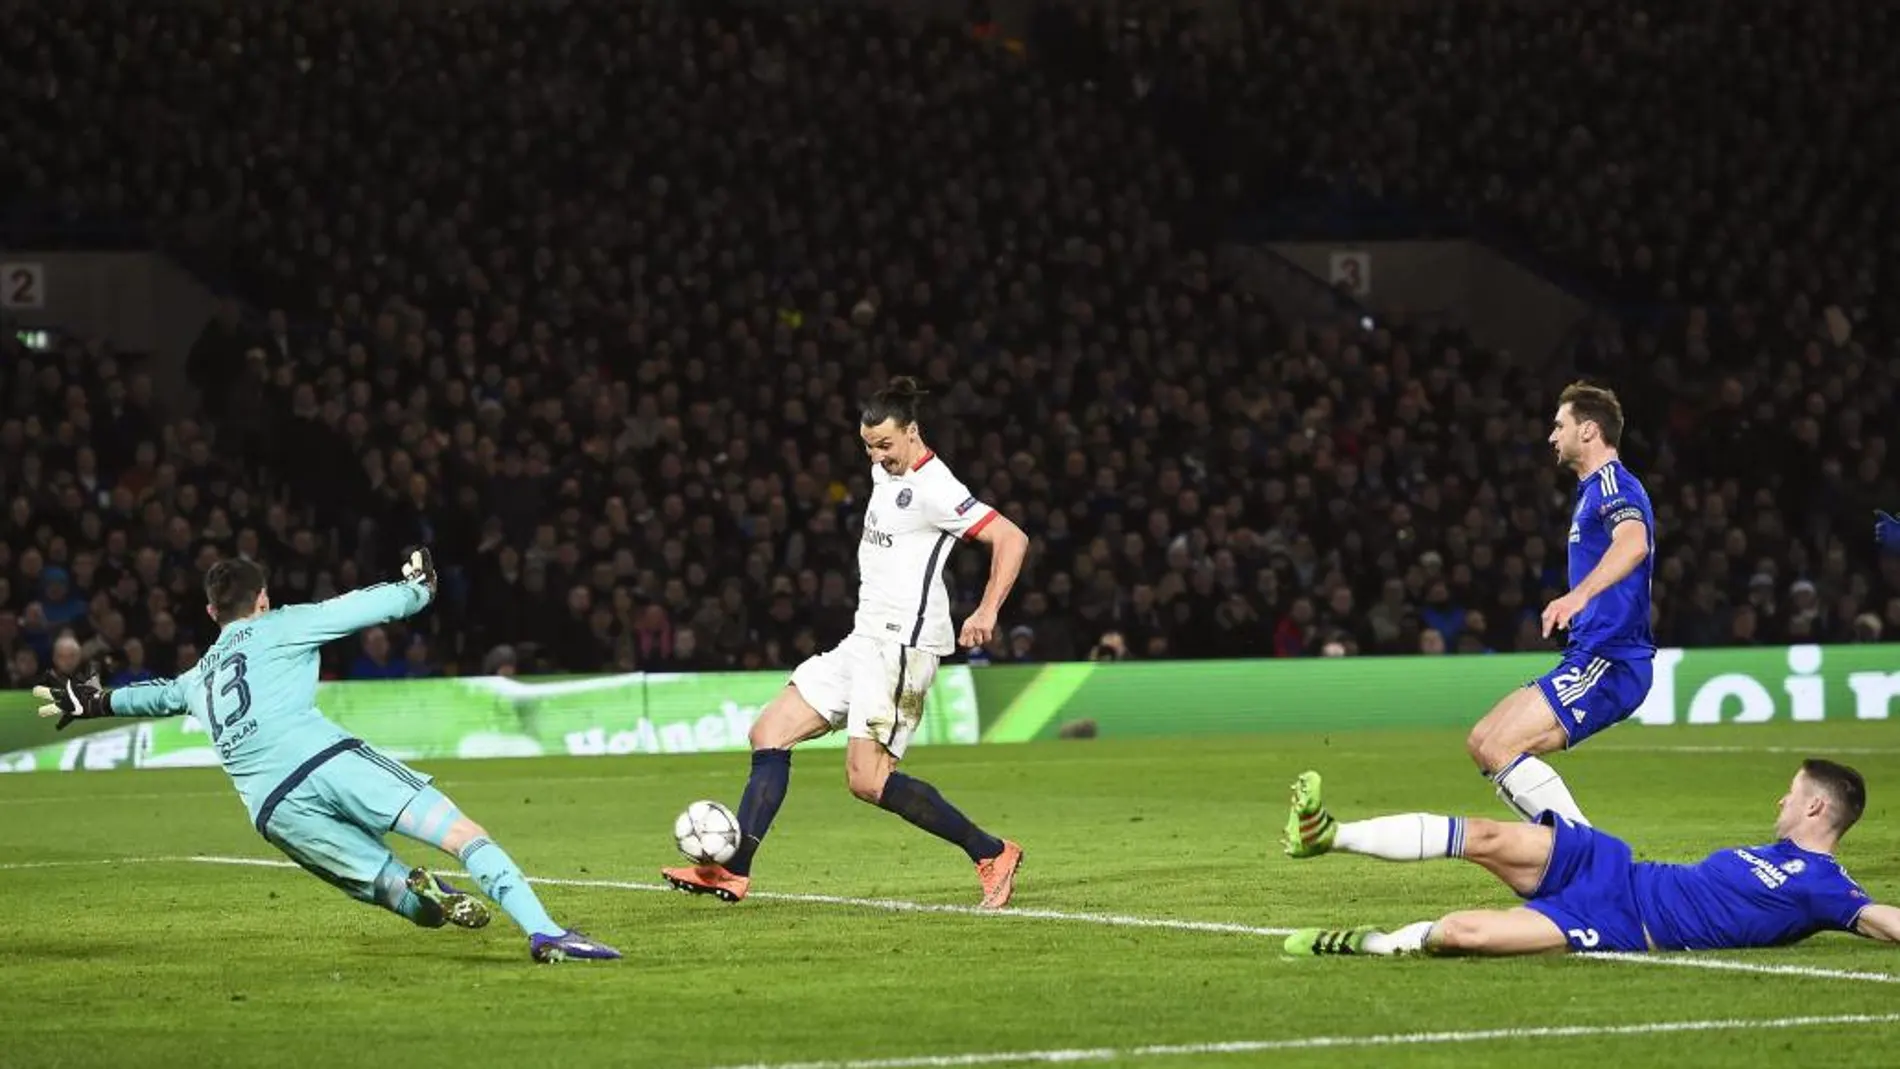 El jugador del Paris Saint-Germain Zlatan Ibrahimovic (c) anota el gol del 1-2